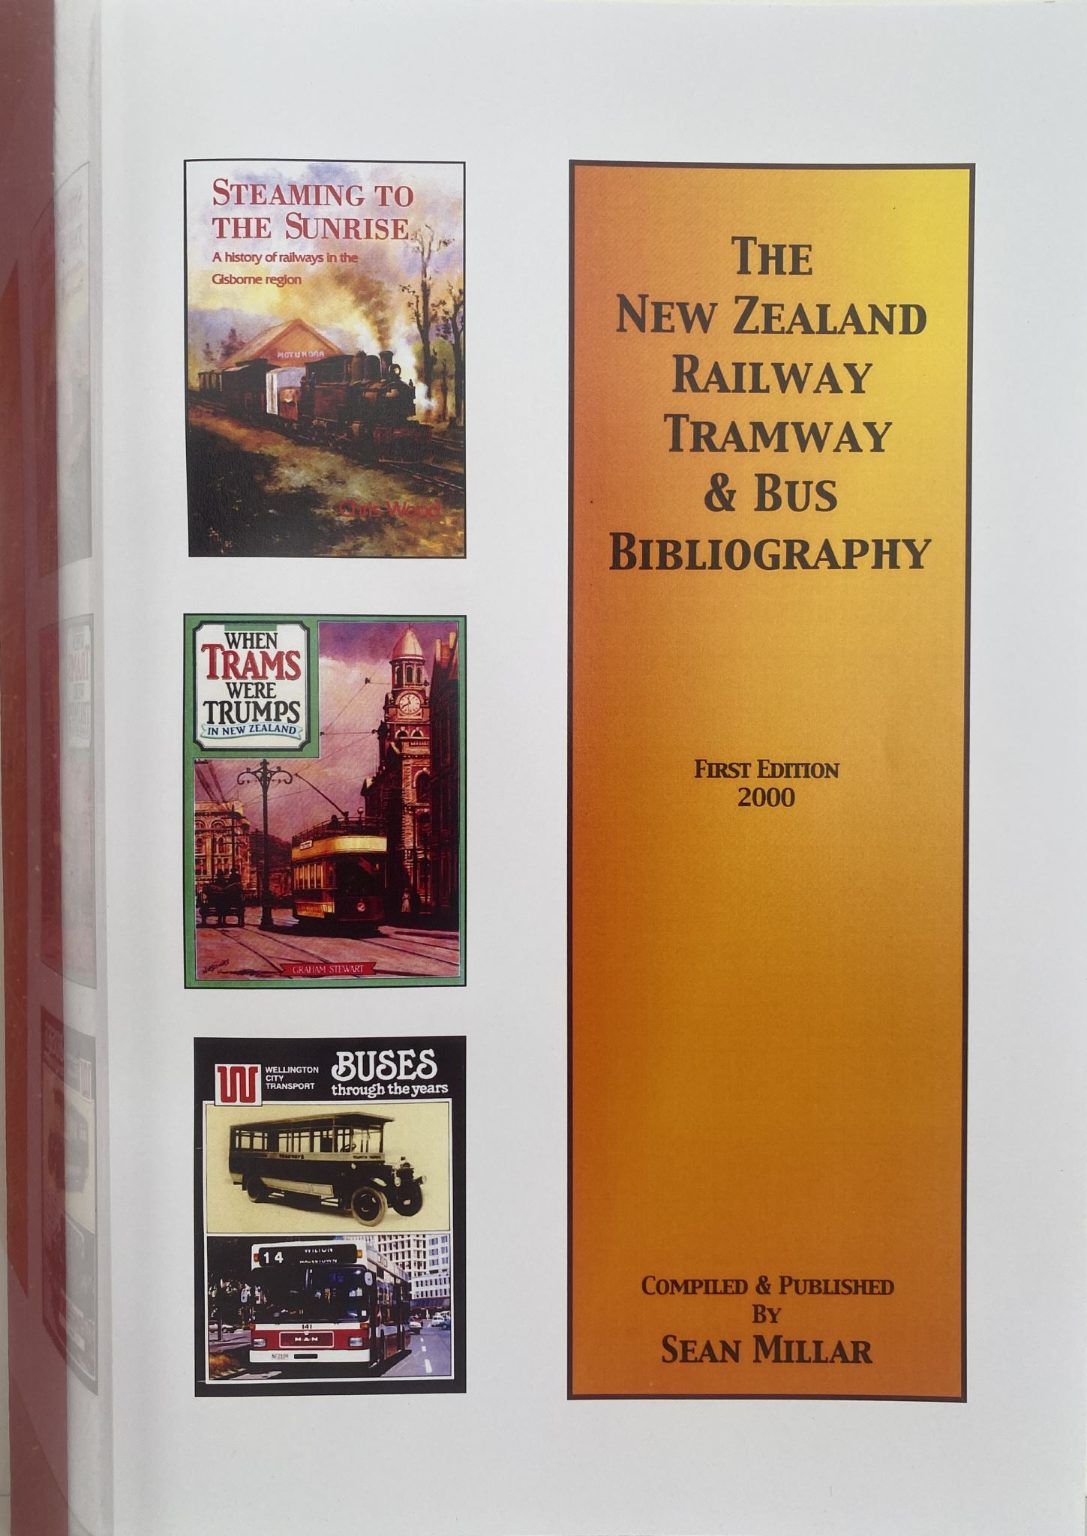 THE NEW ZEALAND RAILWAY TRAMWAY & BUS BIBLIOGRAPHY